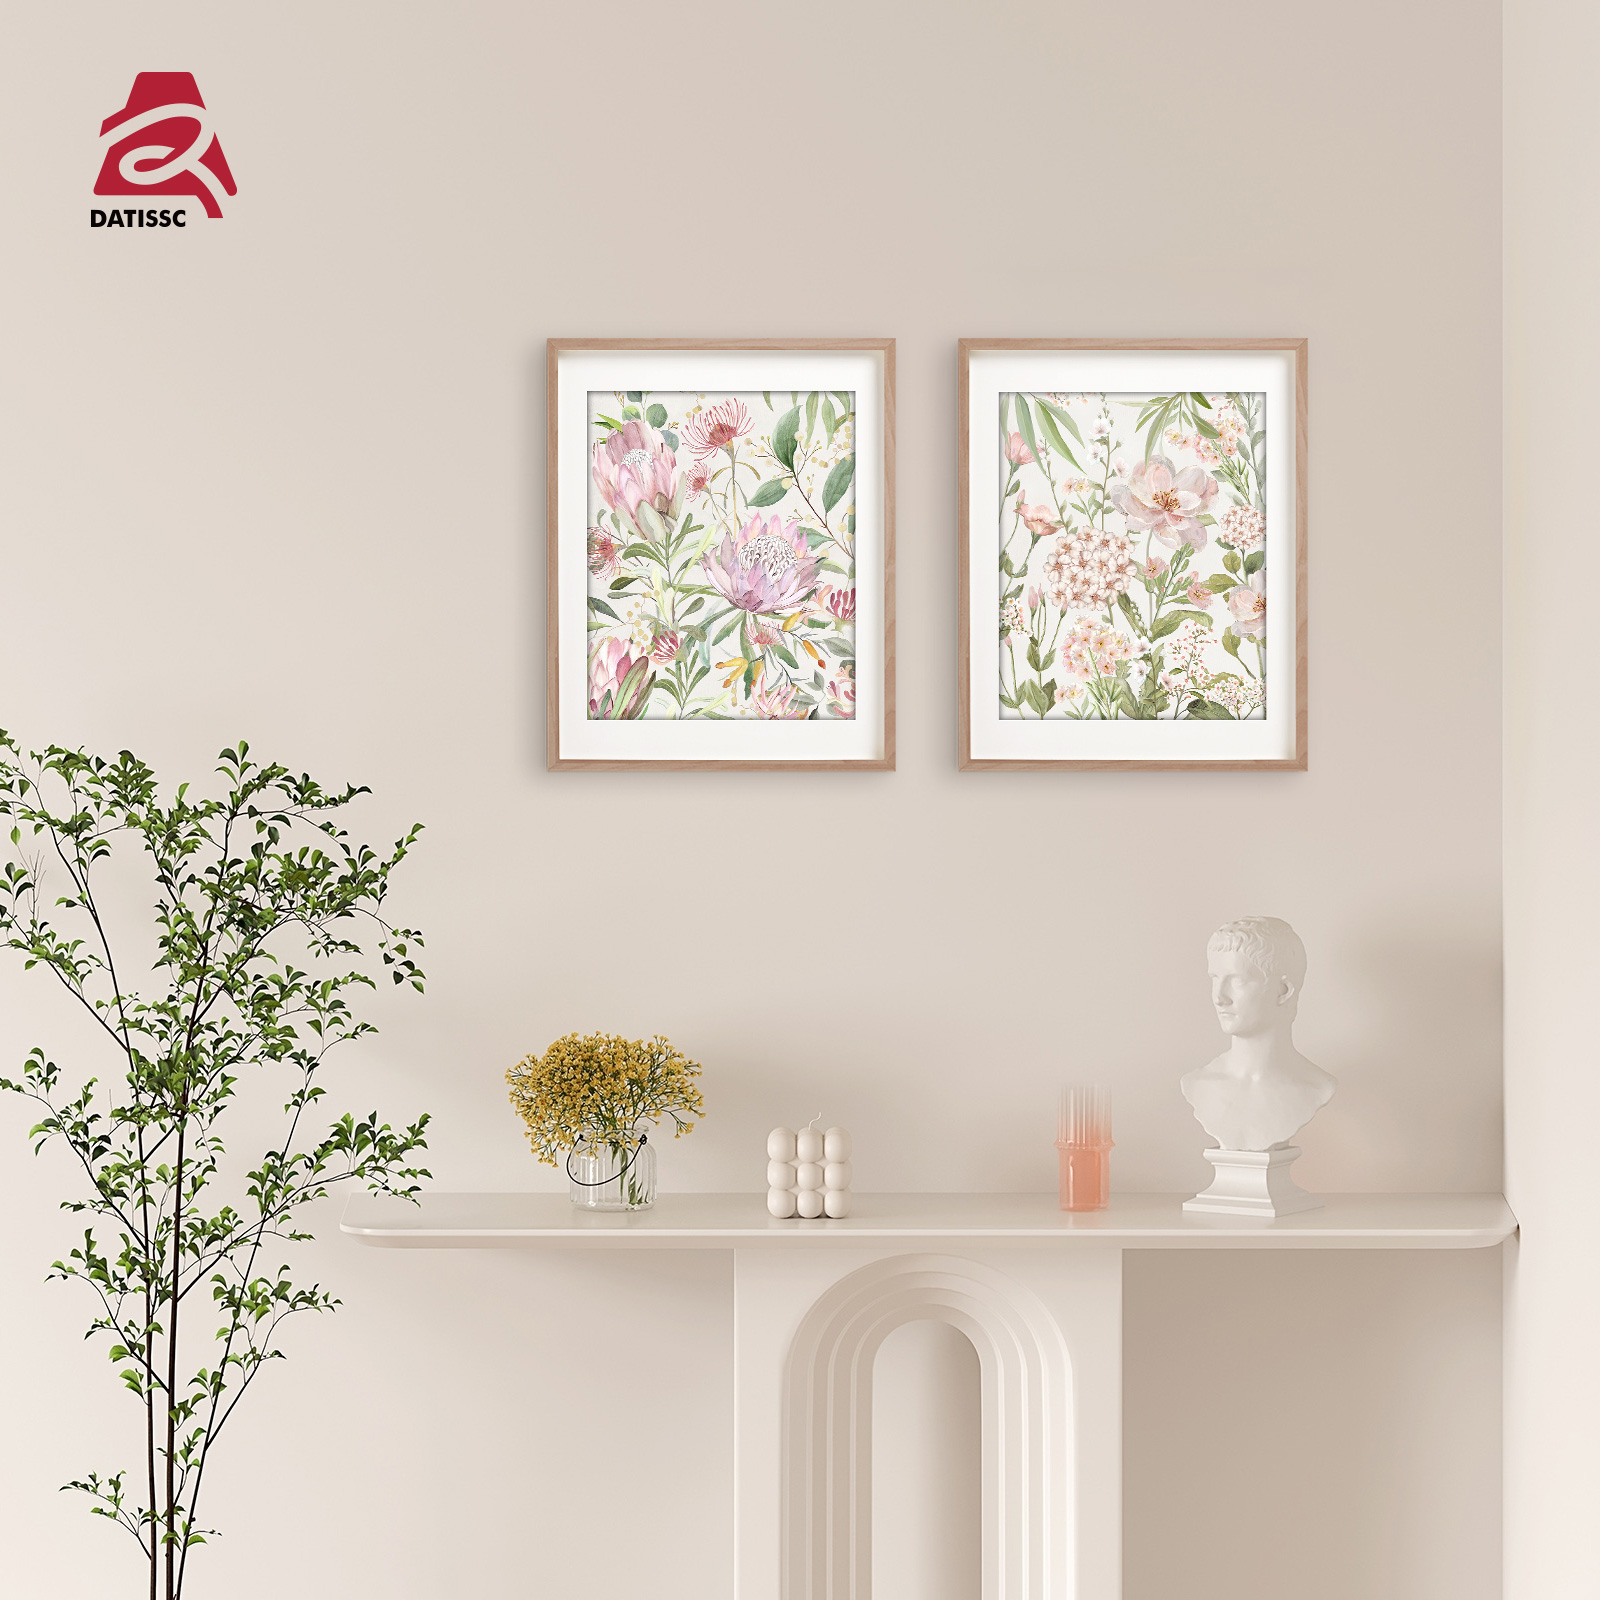 Spring Pink Hydrangea Framed On Canvas 2 Pieces Print - Lava Odoro-LAVA ODORO